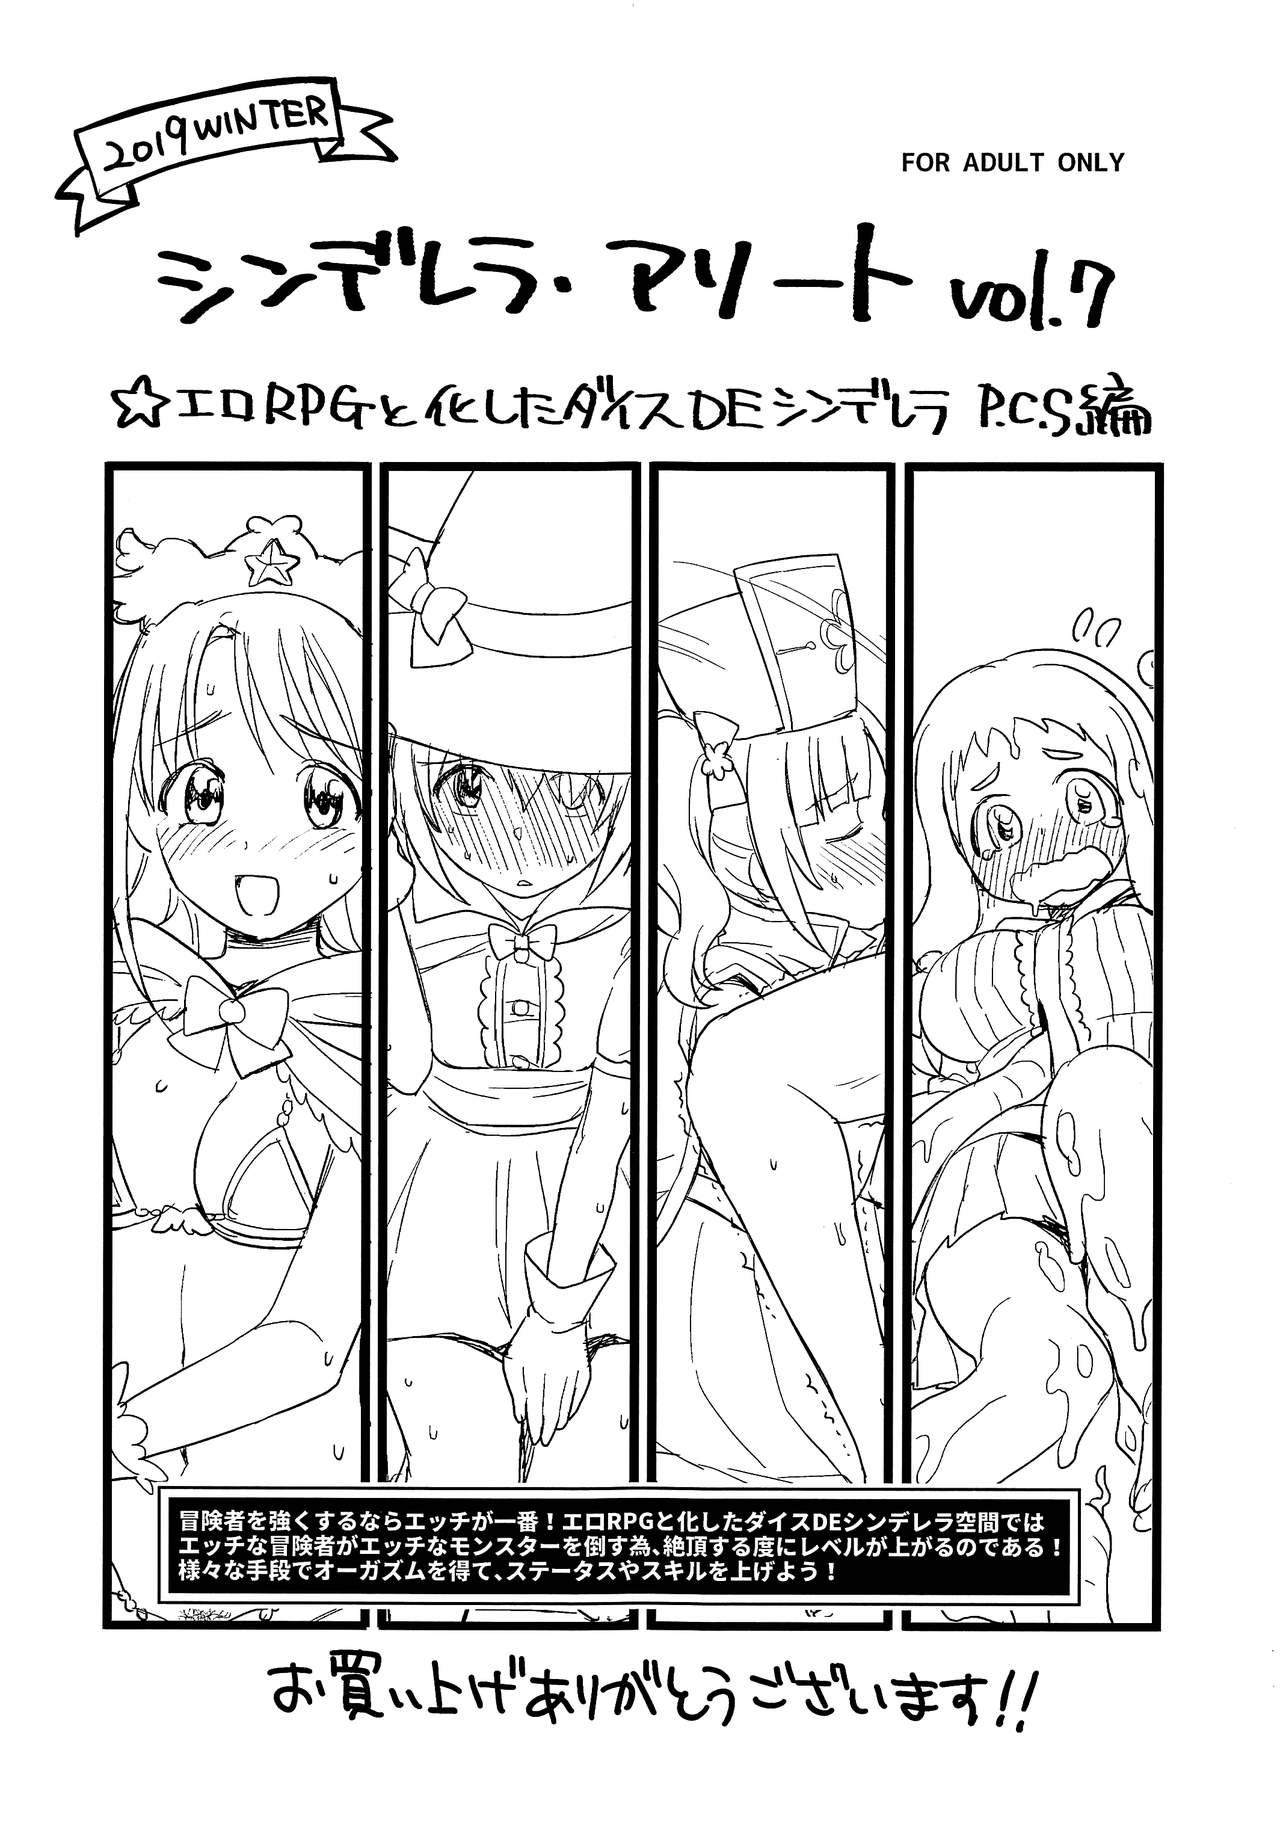 Cinderella Assort vol. 7 Ero RPG to kashita Dice DE Cinderella P.C.S Hen 0